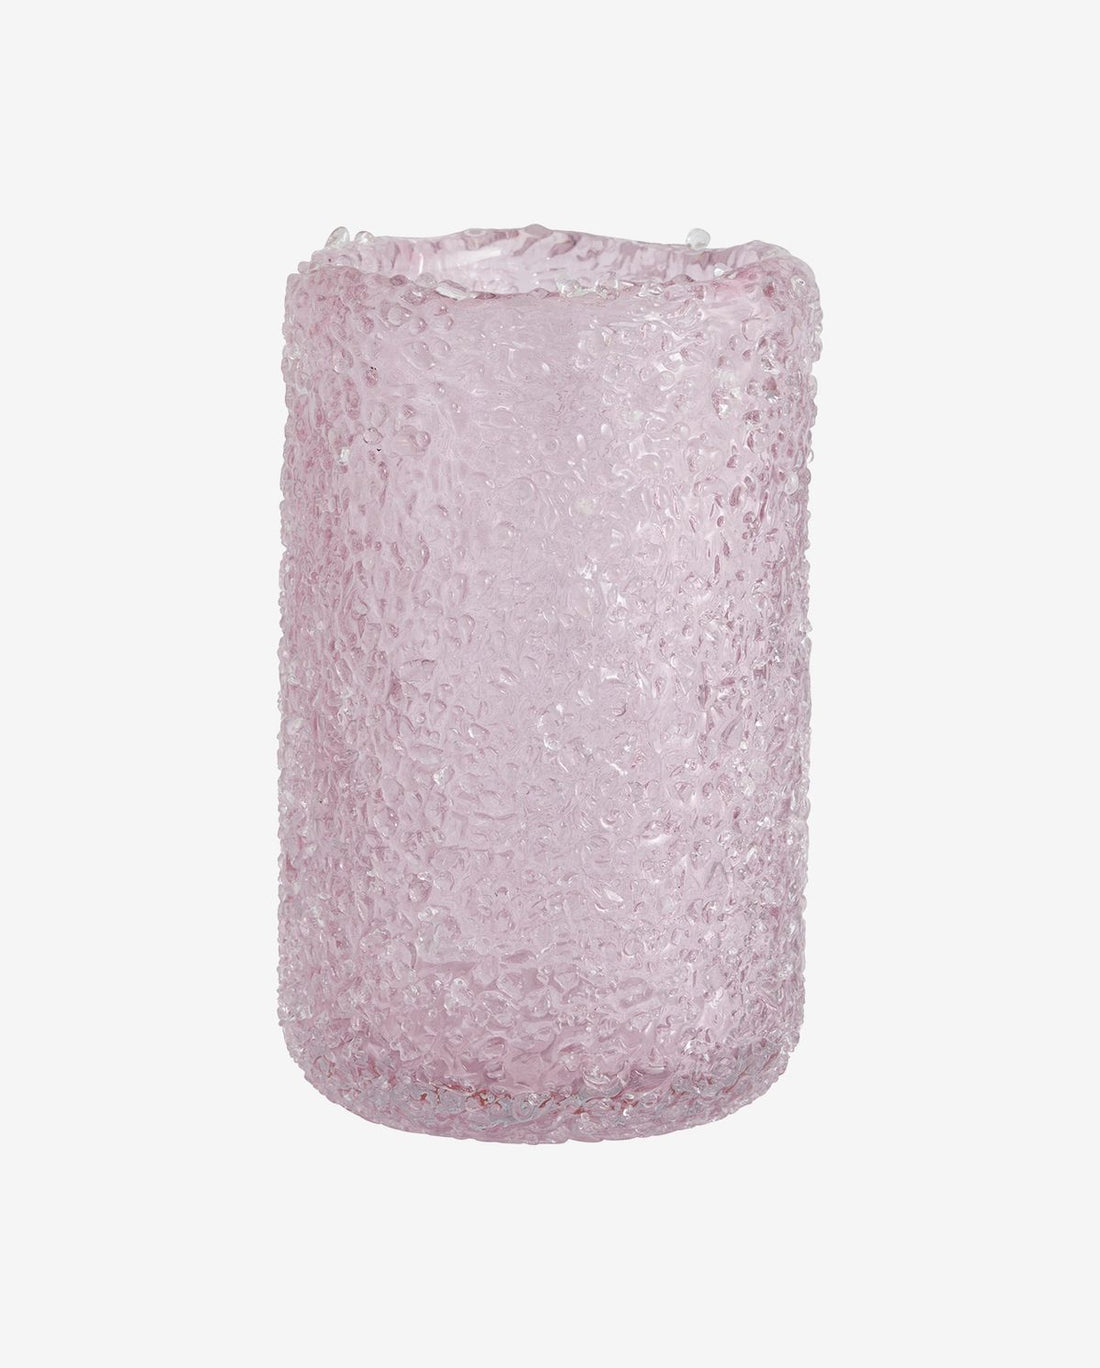 Nordal Clyde vaso, M, rosa